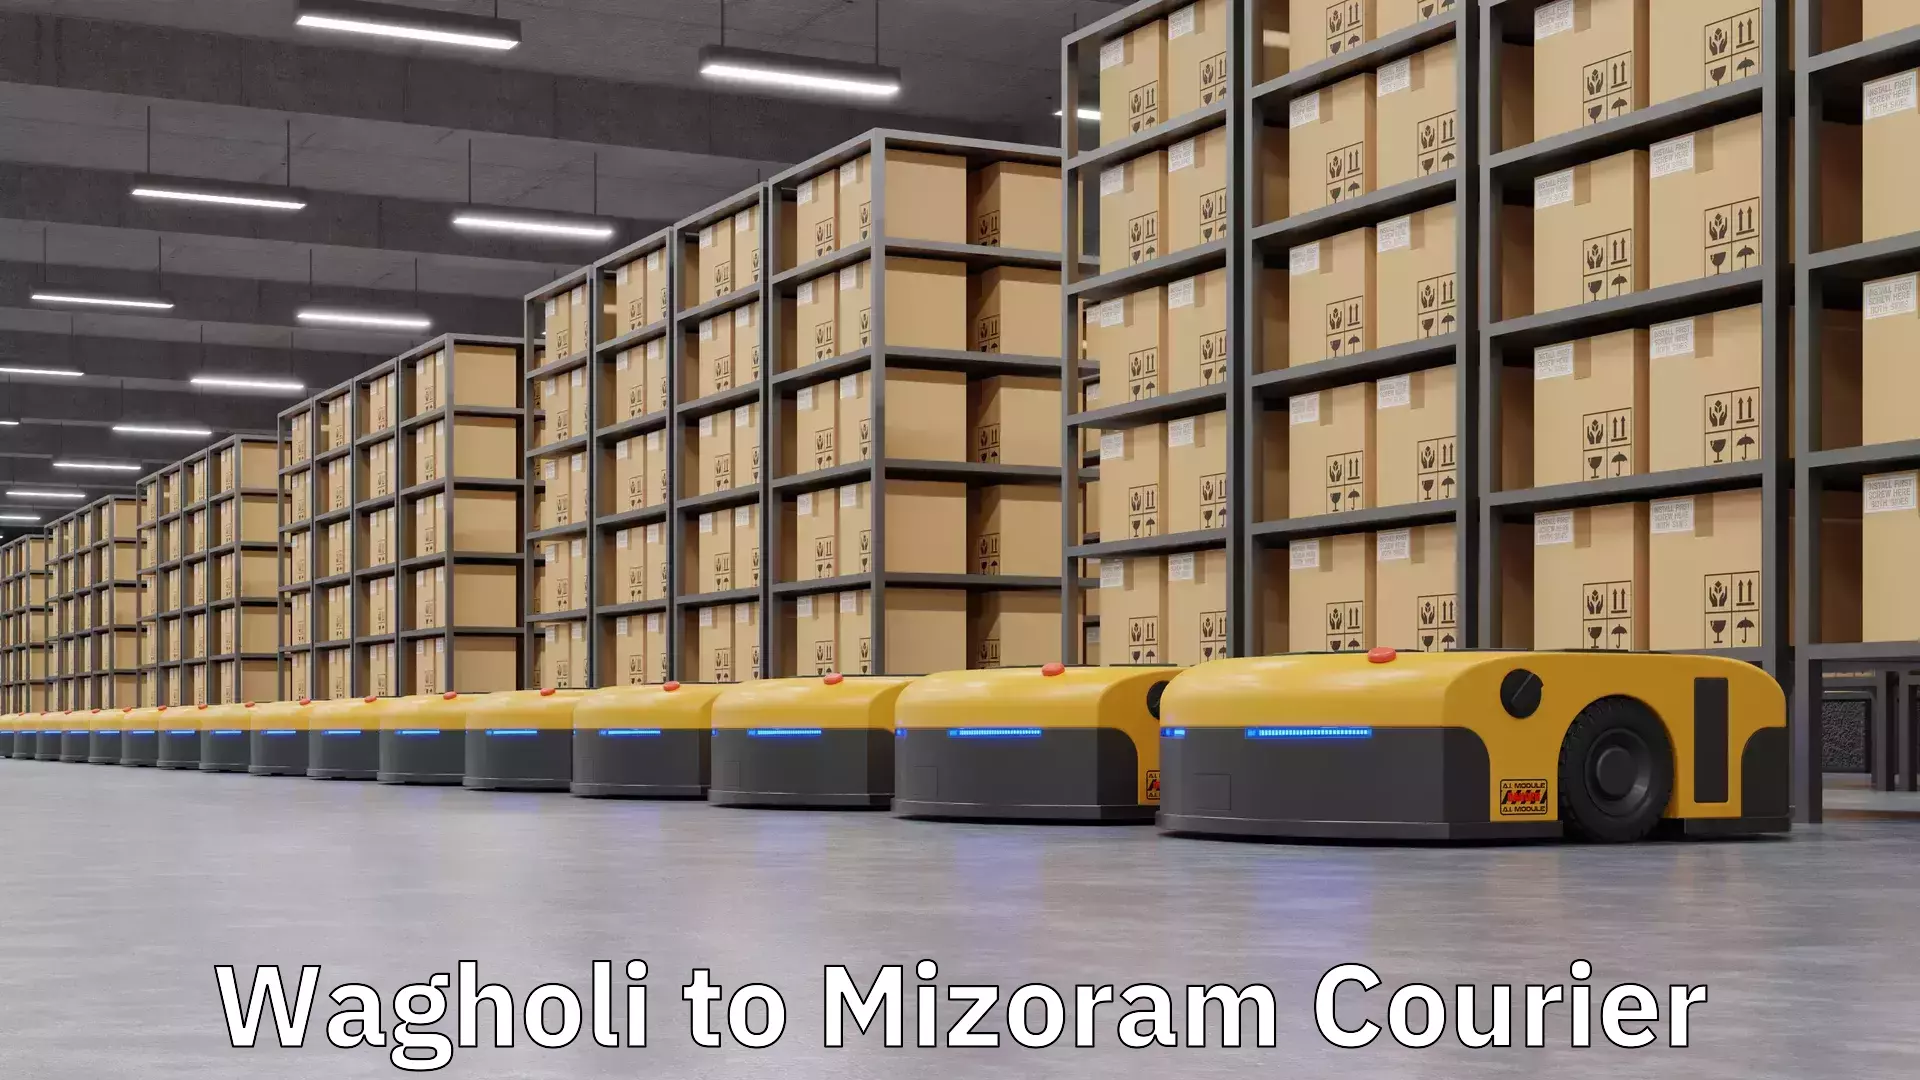 Courier service comparison Wagholi to Mizoram